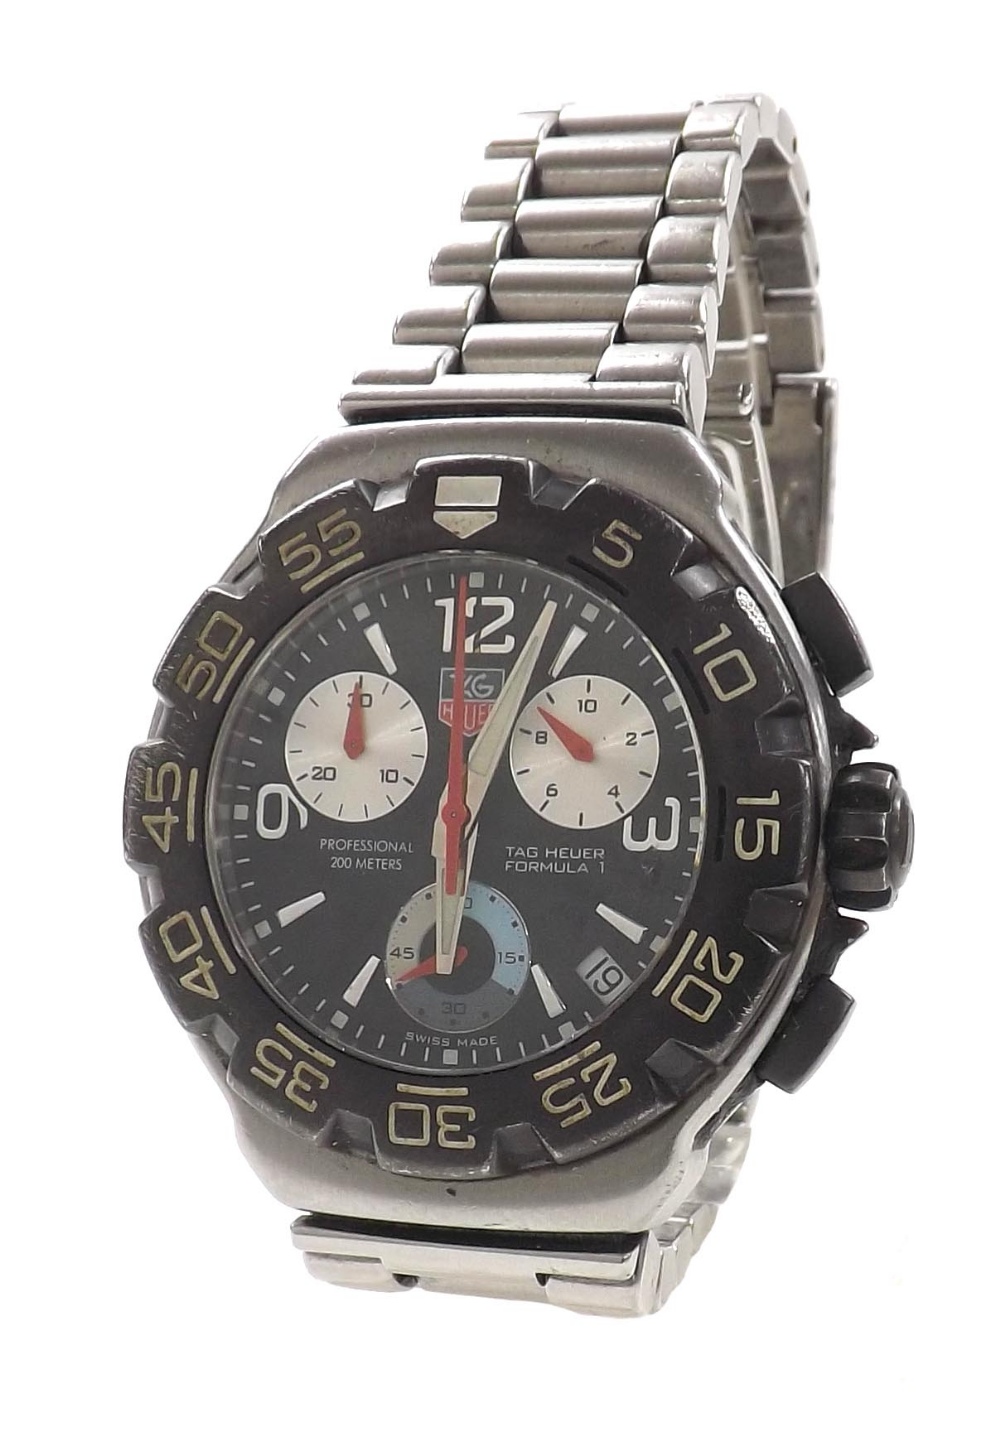 Tag Heuer Formula 1 Professional 200m chronograph stainless steel gentleman's bracelet watch, ref.